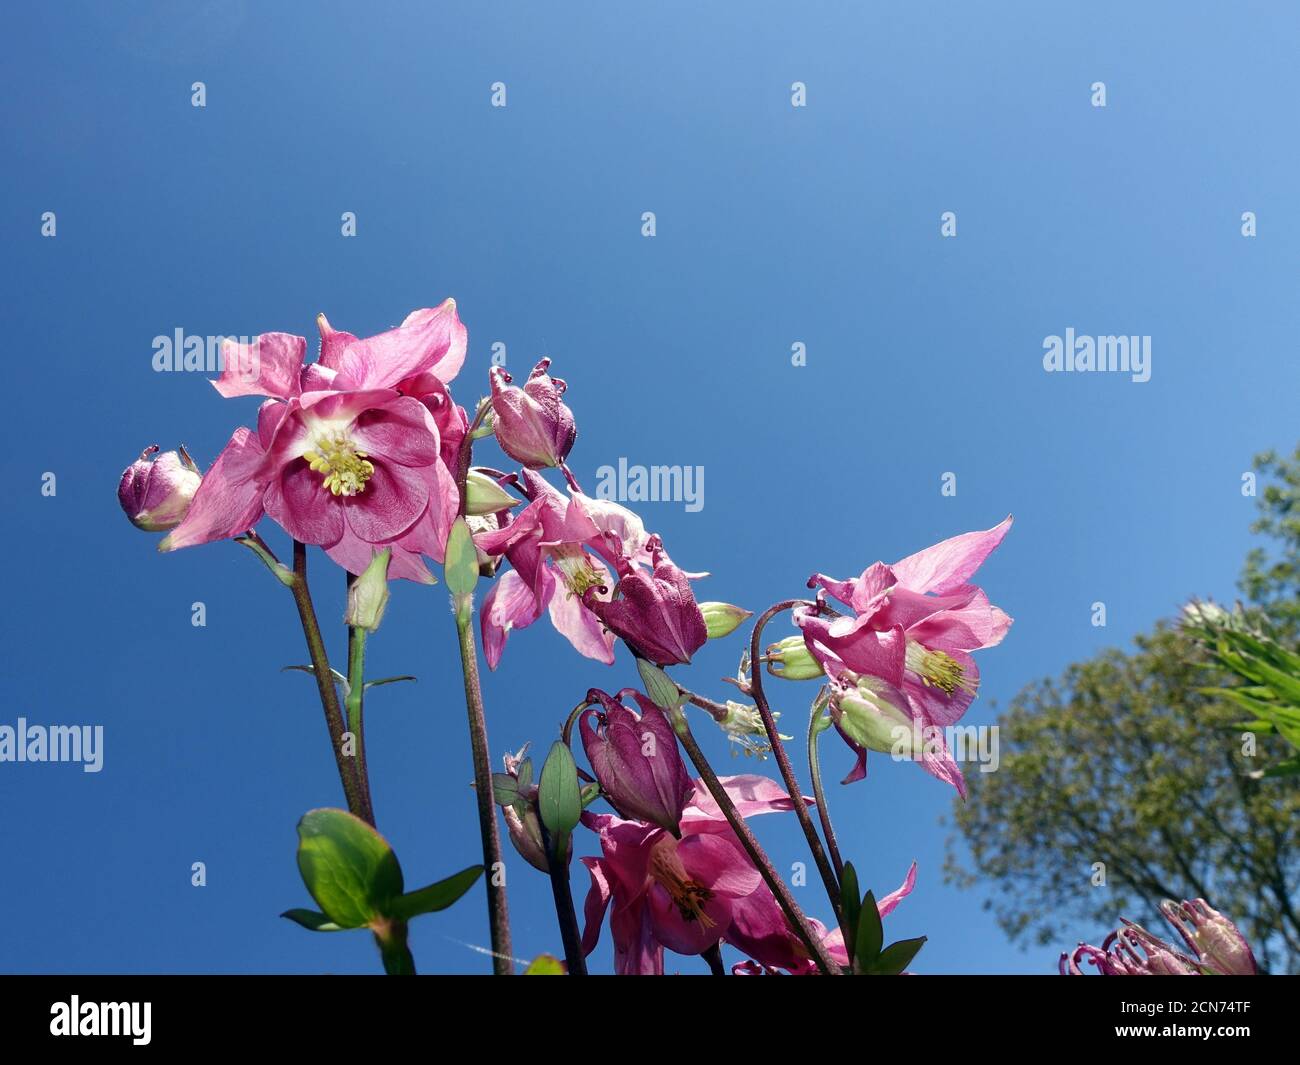 Common columbine (Aquilegia vulgaris), pink hybrid in the garden Stock Photo